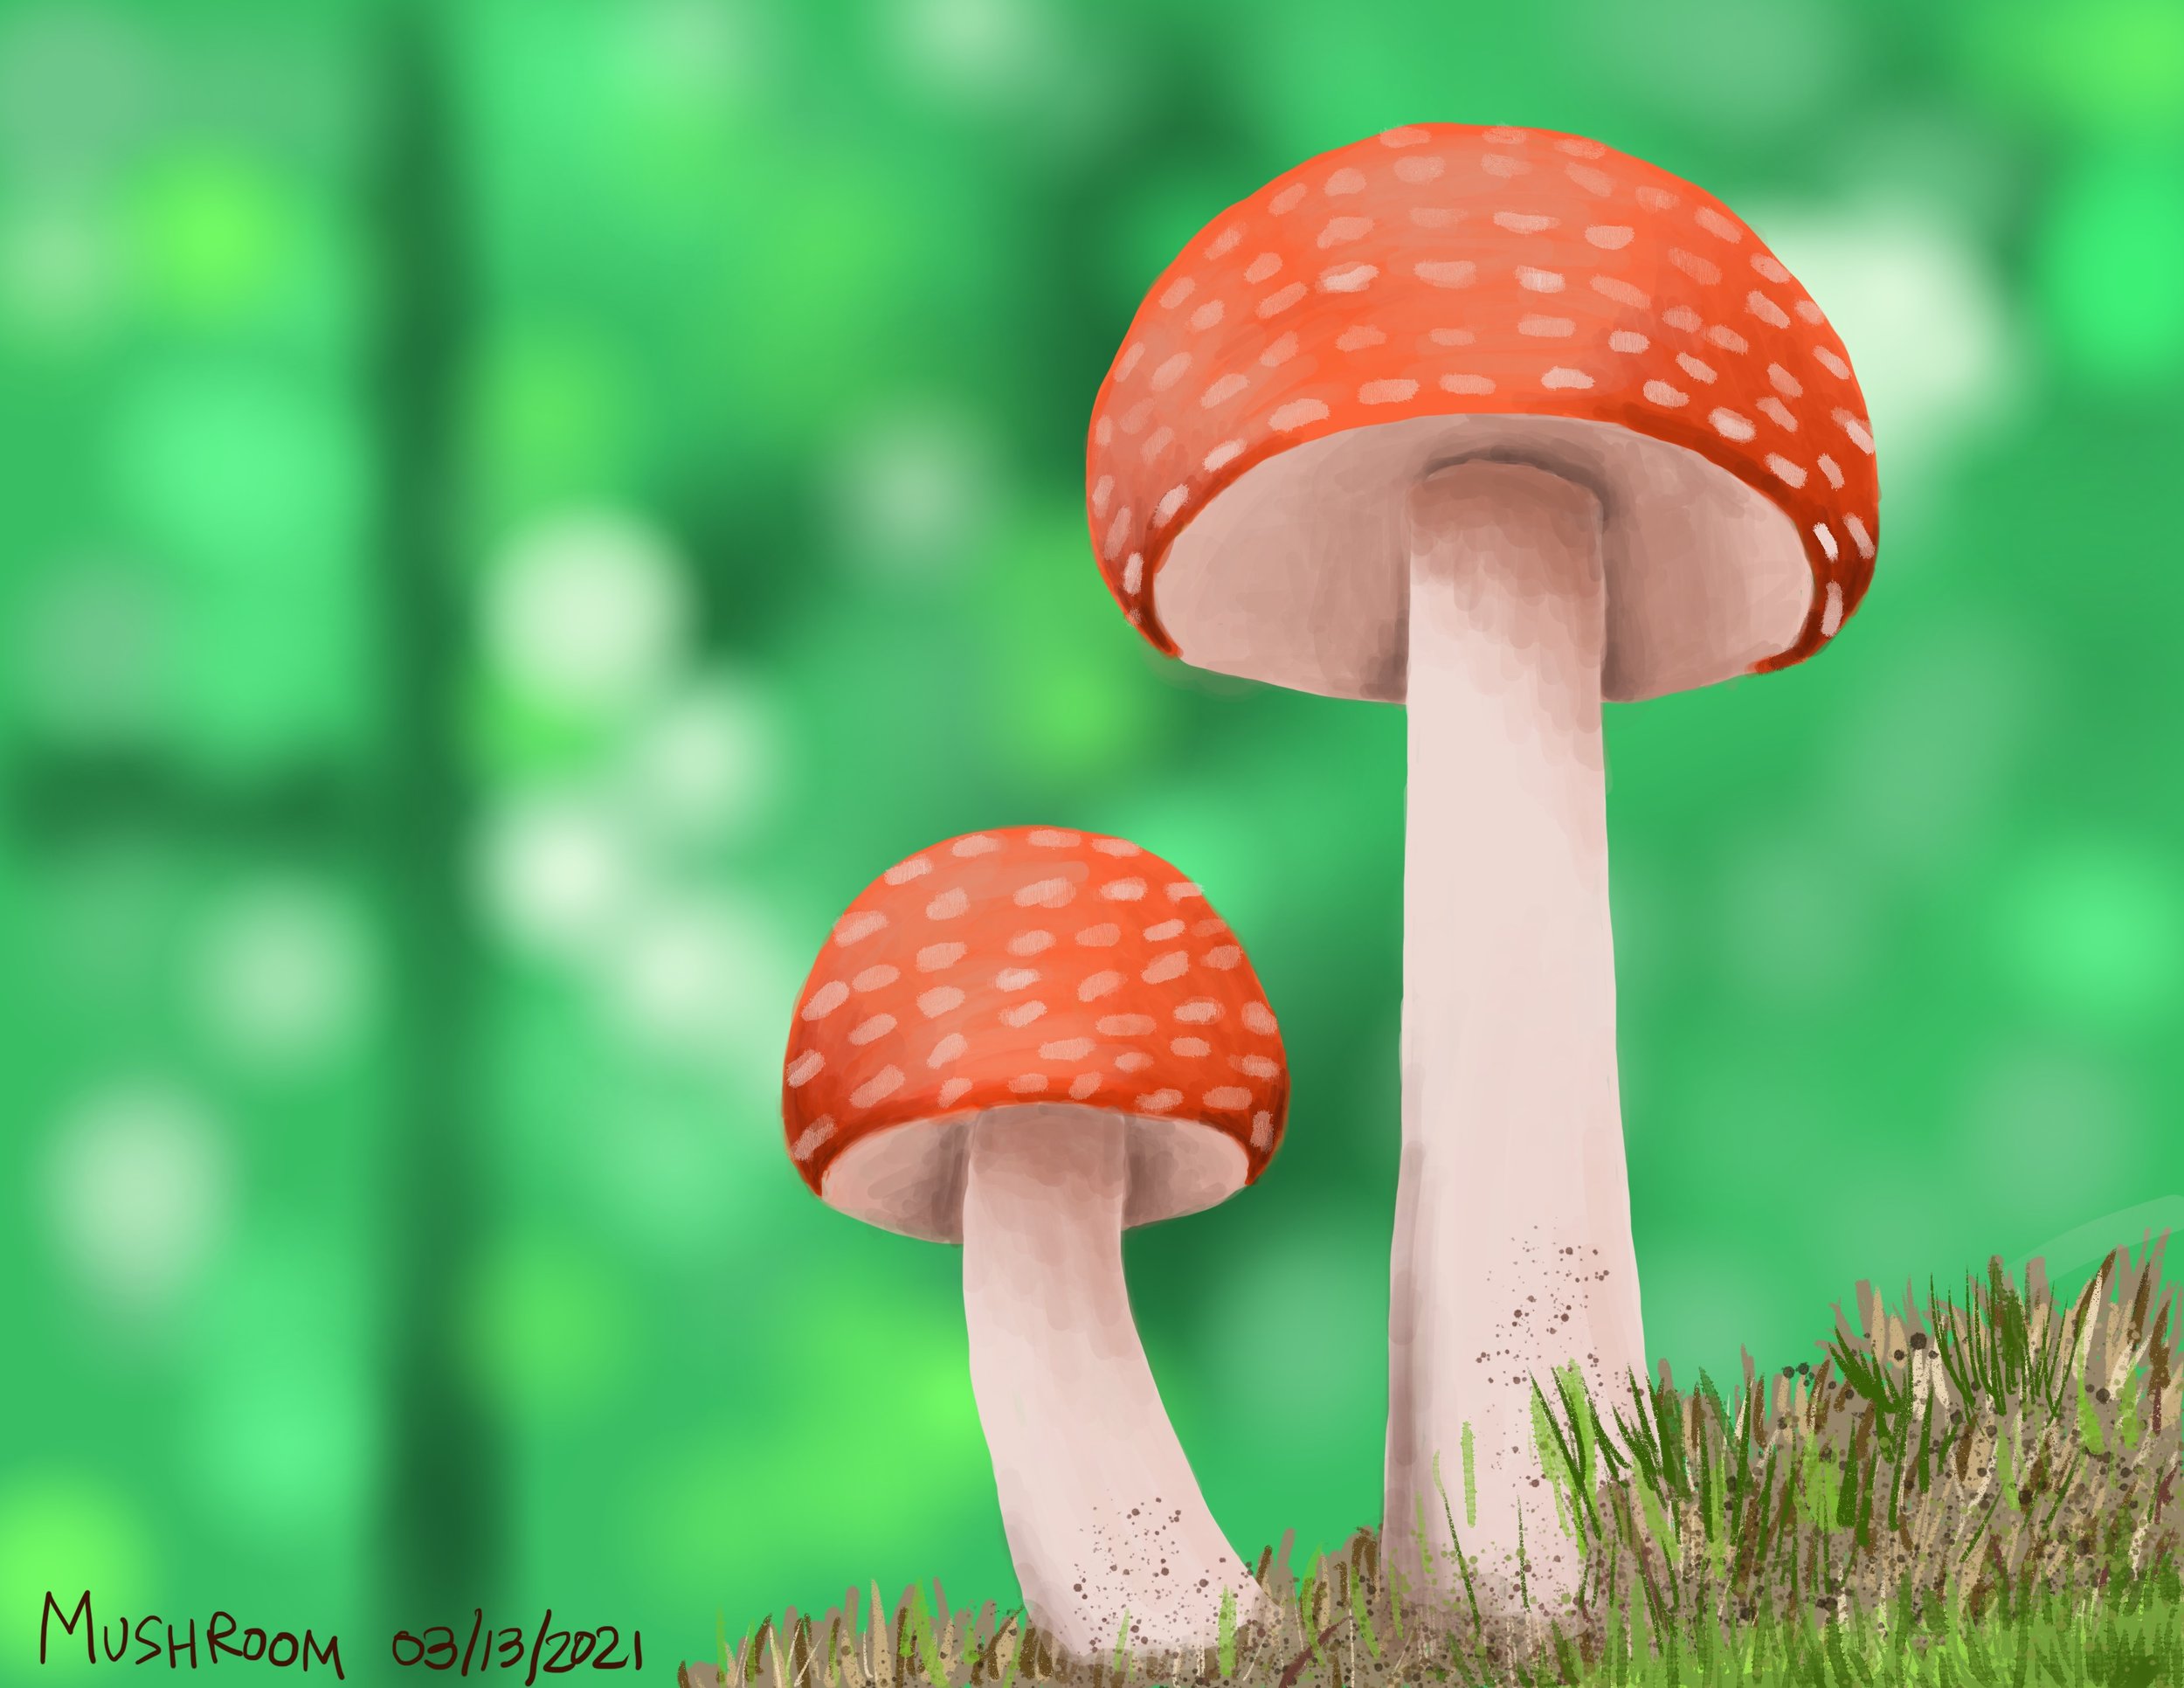 Mushrooms_31321.jpg